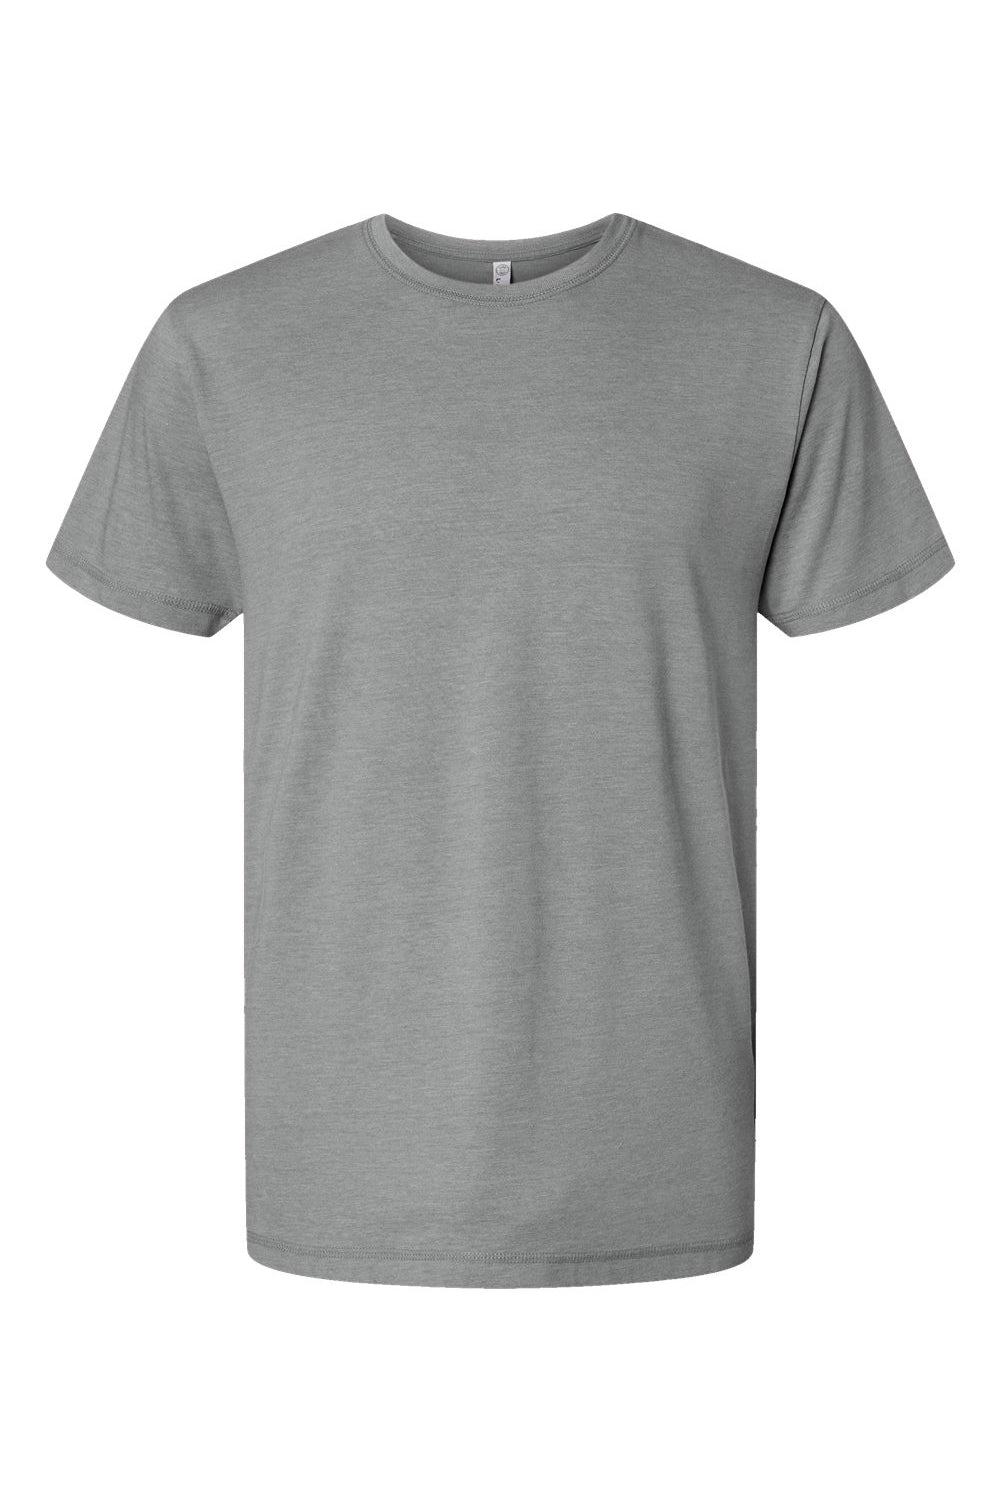 LAT 6902 Mens Vintage Wash Short Sleeve Crewneck T-Shirt Grey Flat Front